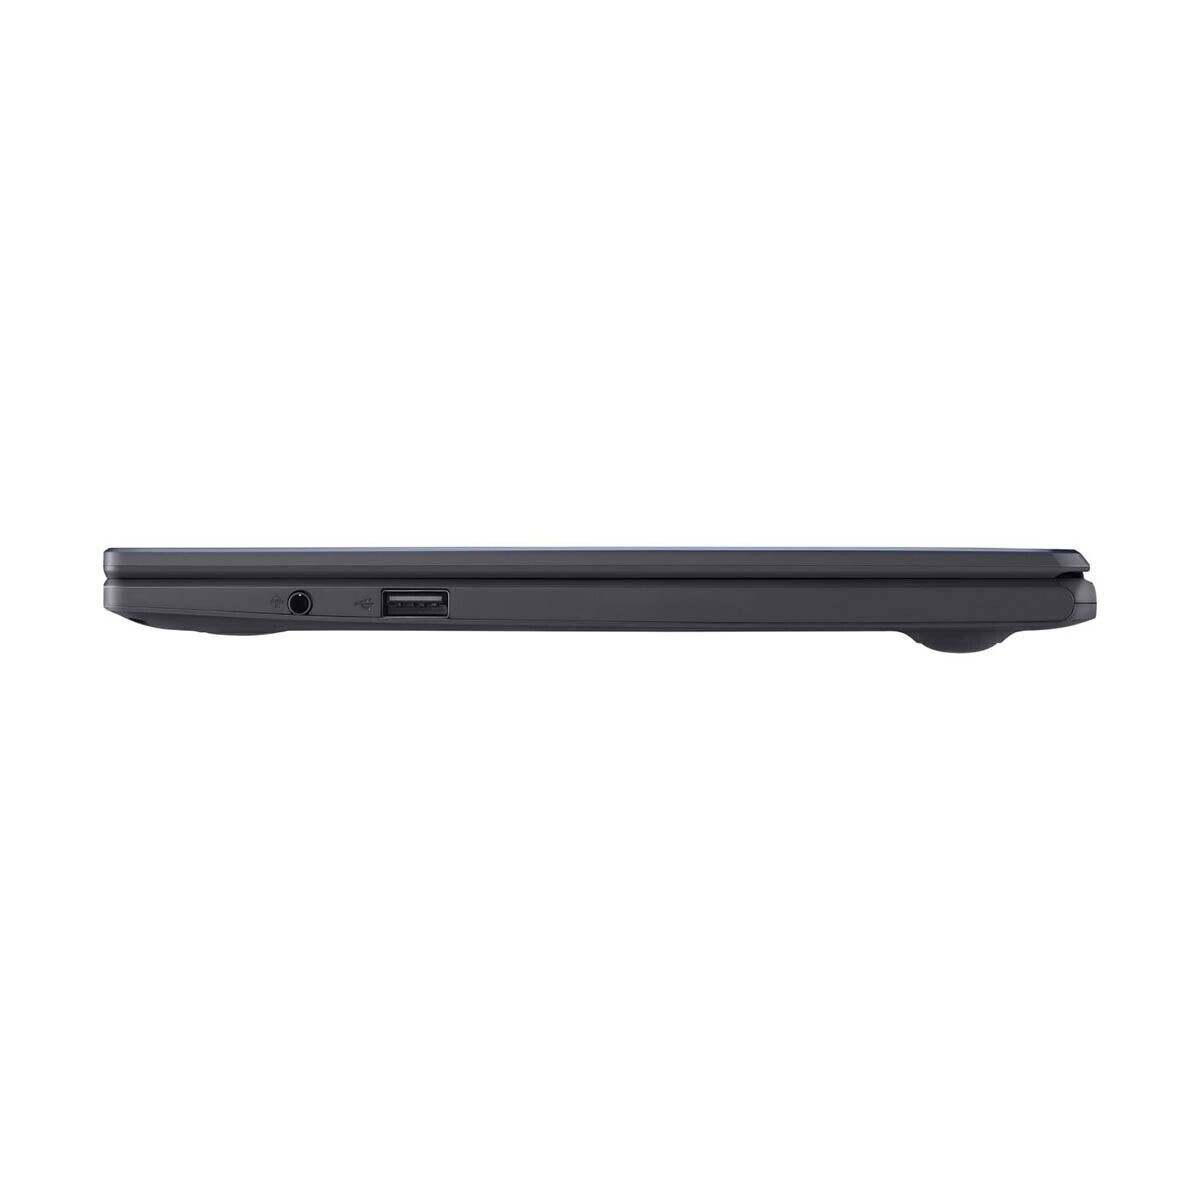 ASUS Laptop 11.6" Celeron N4020 4GB RAM 64GB eMMC Black Win 11